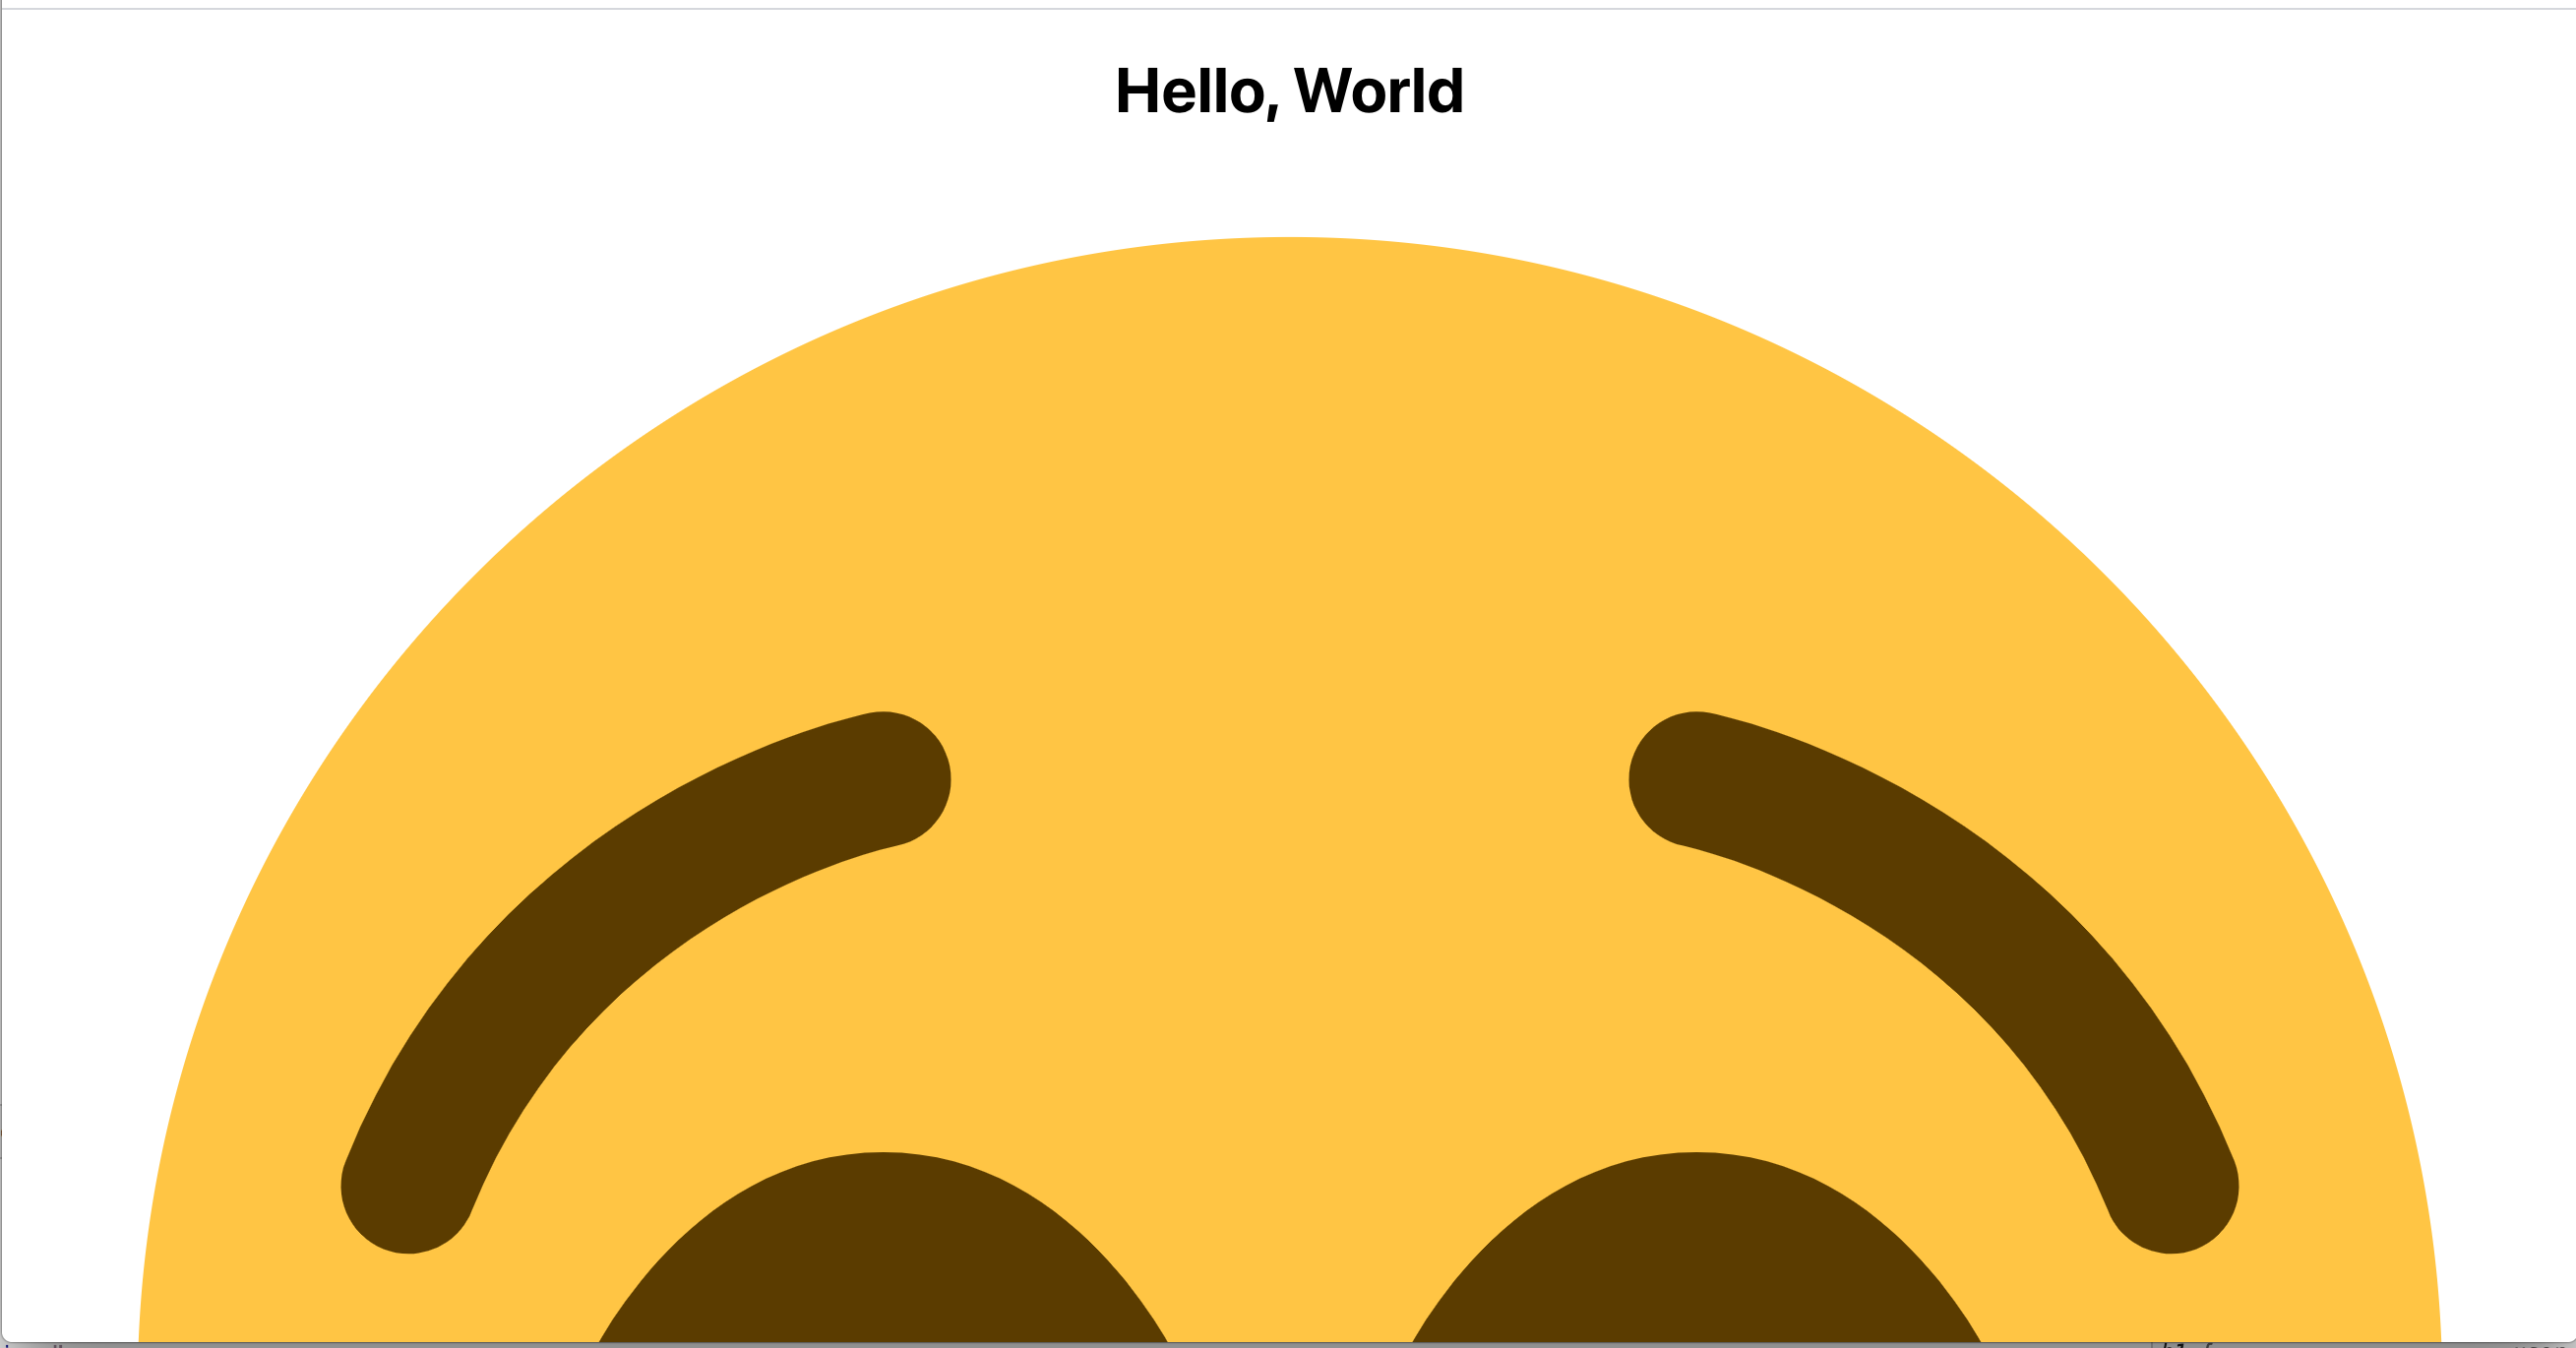 Browser window with large emoji image